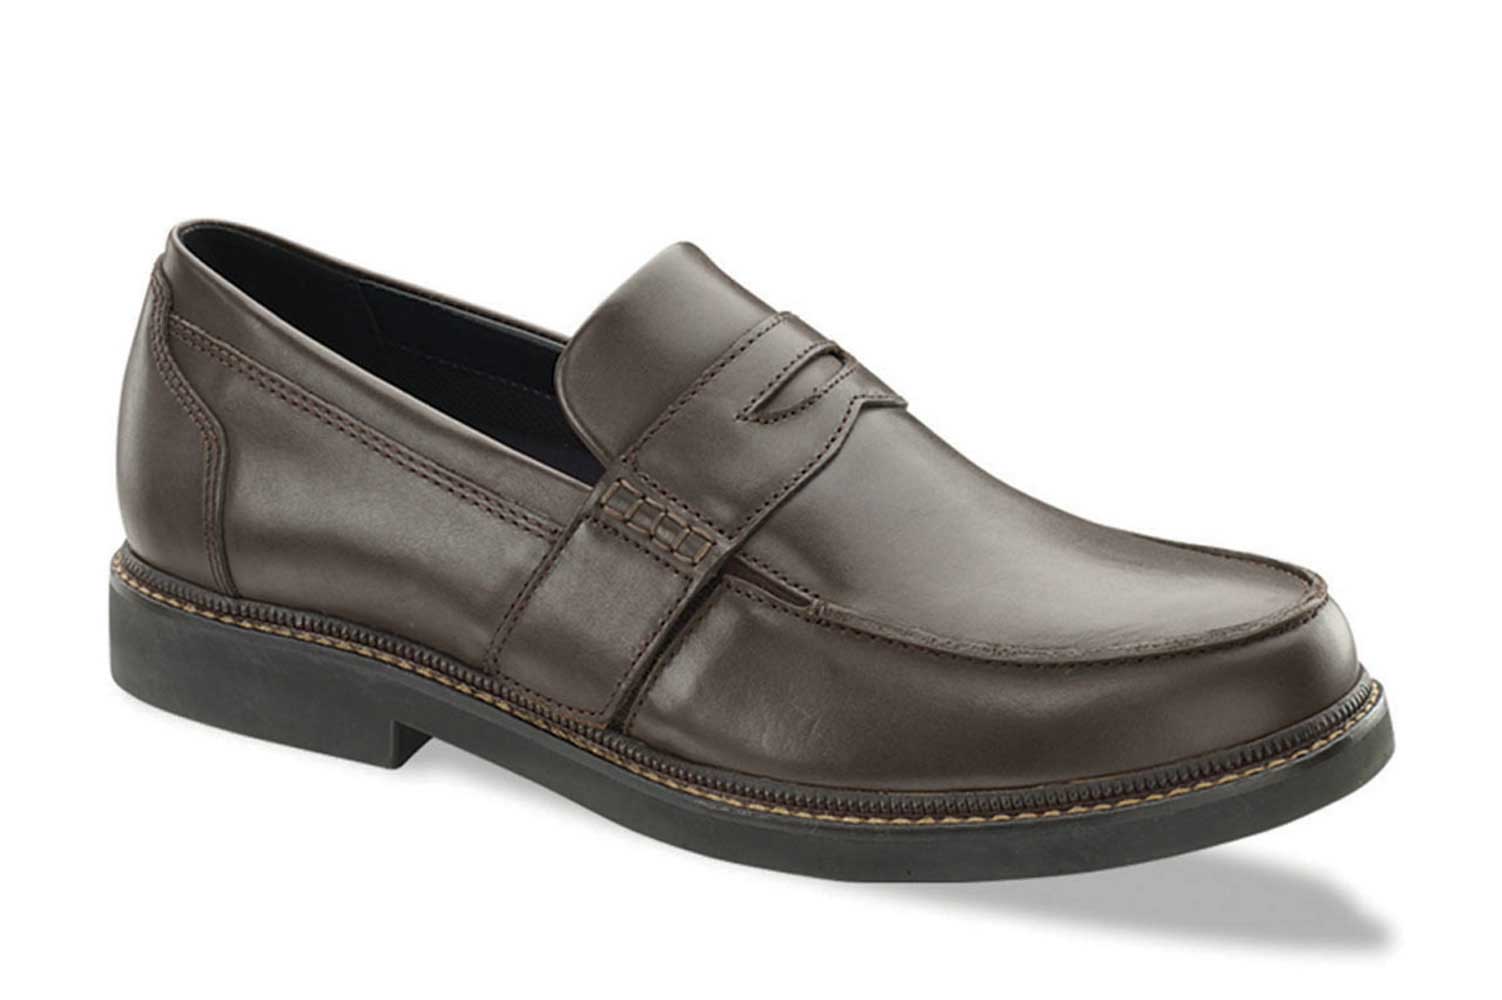 Apex Shoes LT210M Lexington Classic Oxford Dress Shoe - Men's Comfort Therapeutic Diabetic Shoe - Medium - Extra Wide - Extra Depth For Orthotics